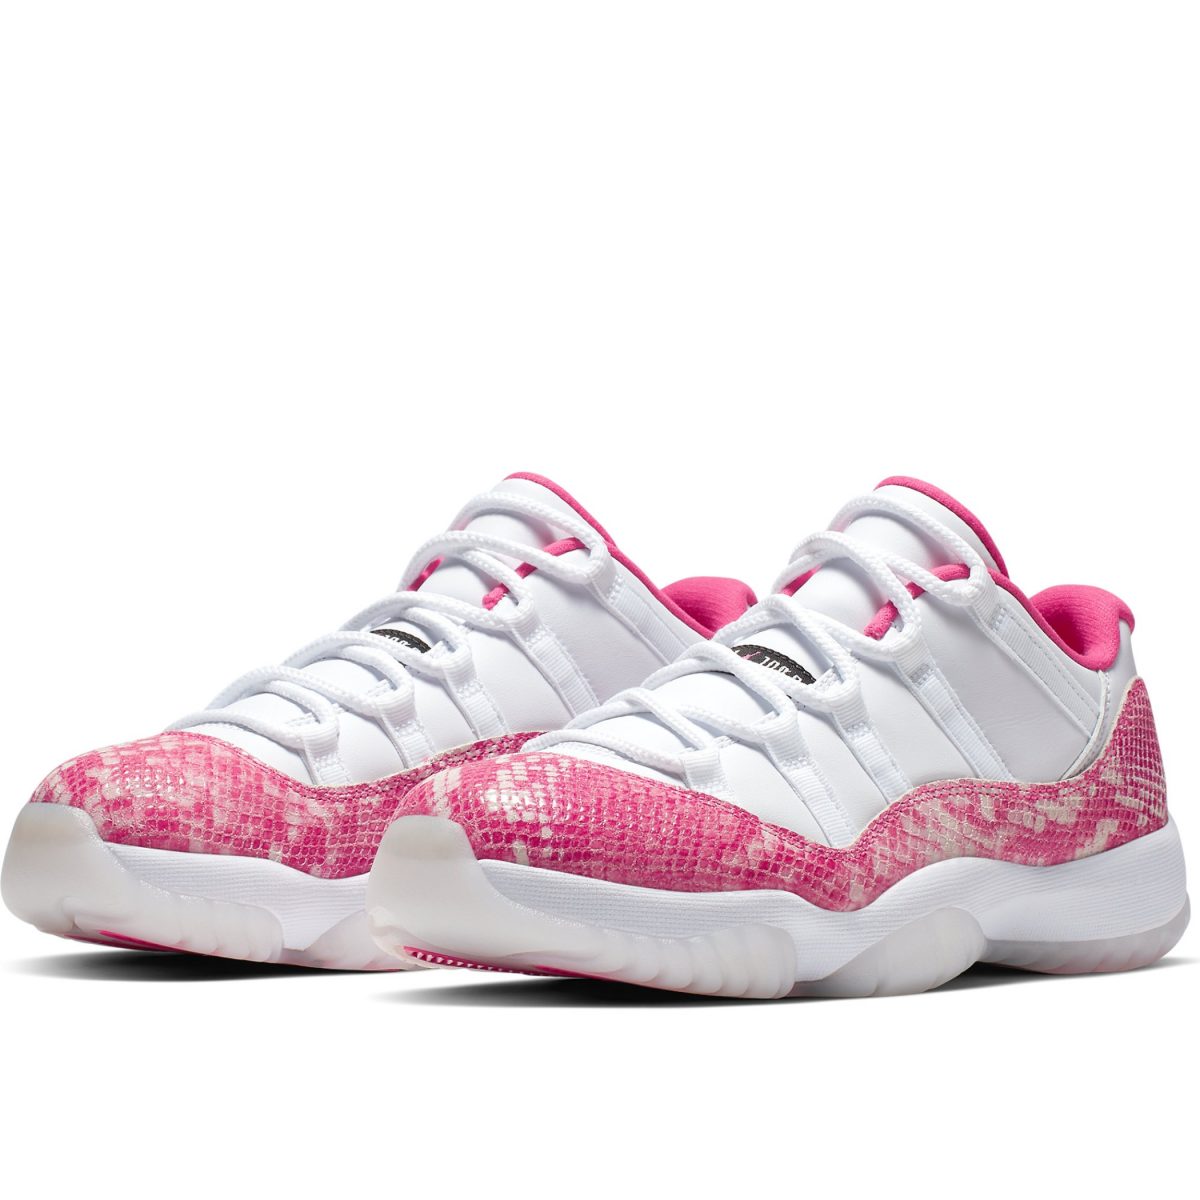 Кроссовки Nike Air Jordan 11 Retro Low Pink Snakeskin фотография